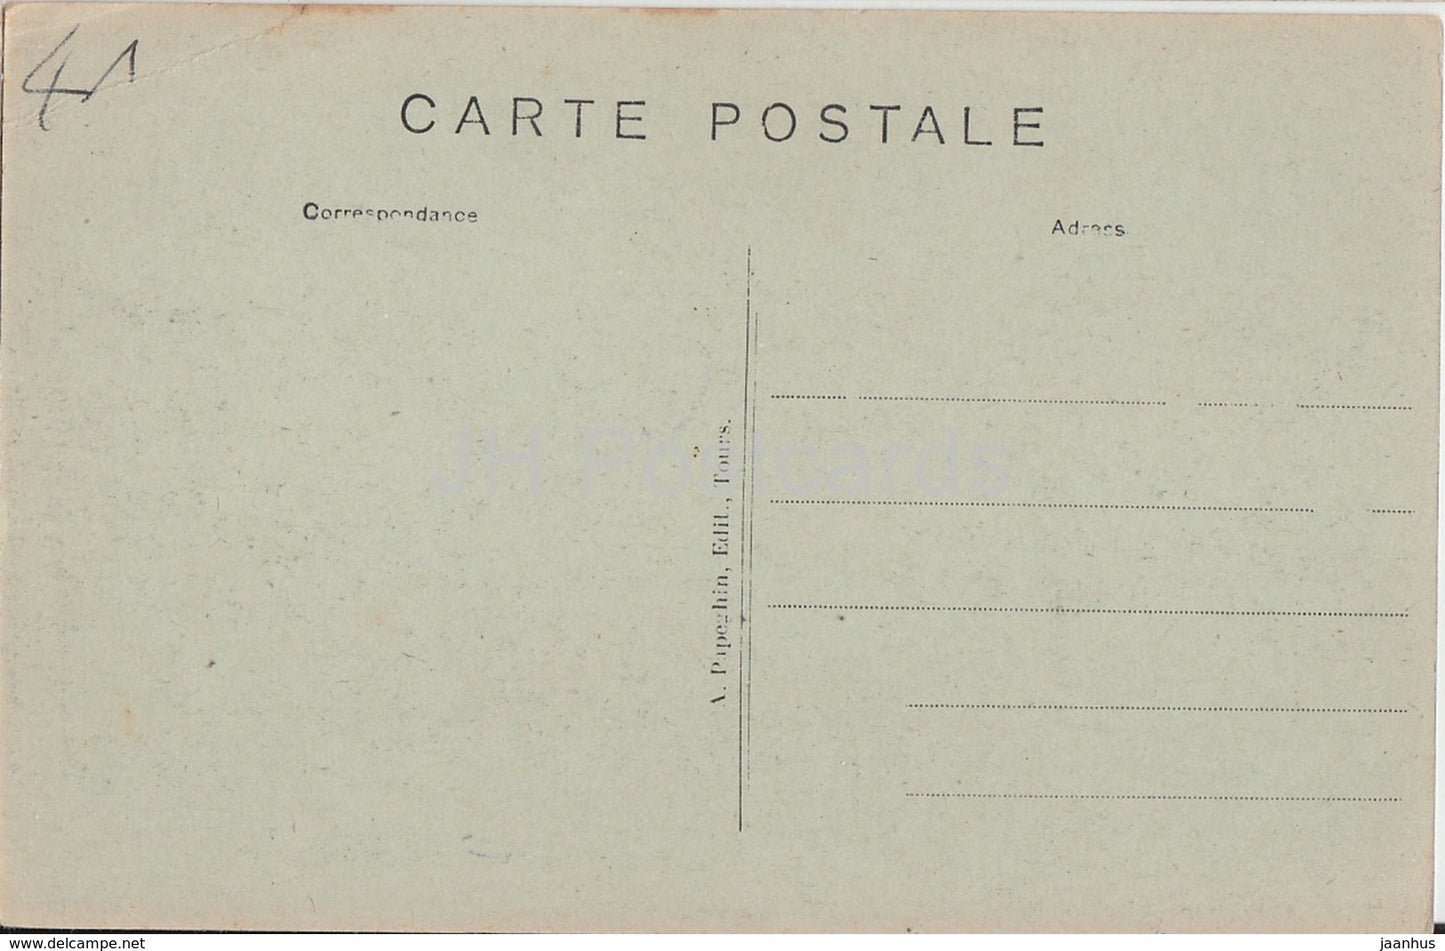 Cheverny - Le Chateau - L'Orangerie - 3 - Schloss - alte Postkarte - Frankreich - unbenutzt